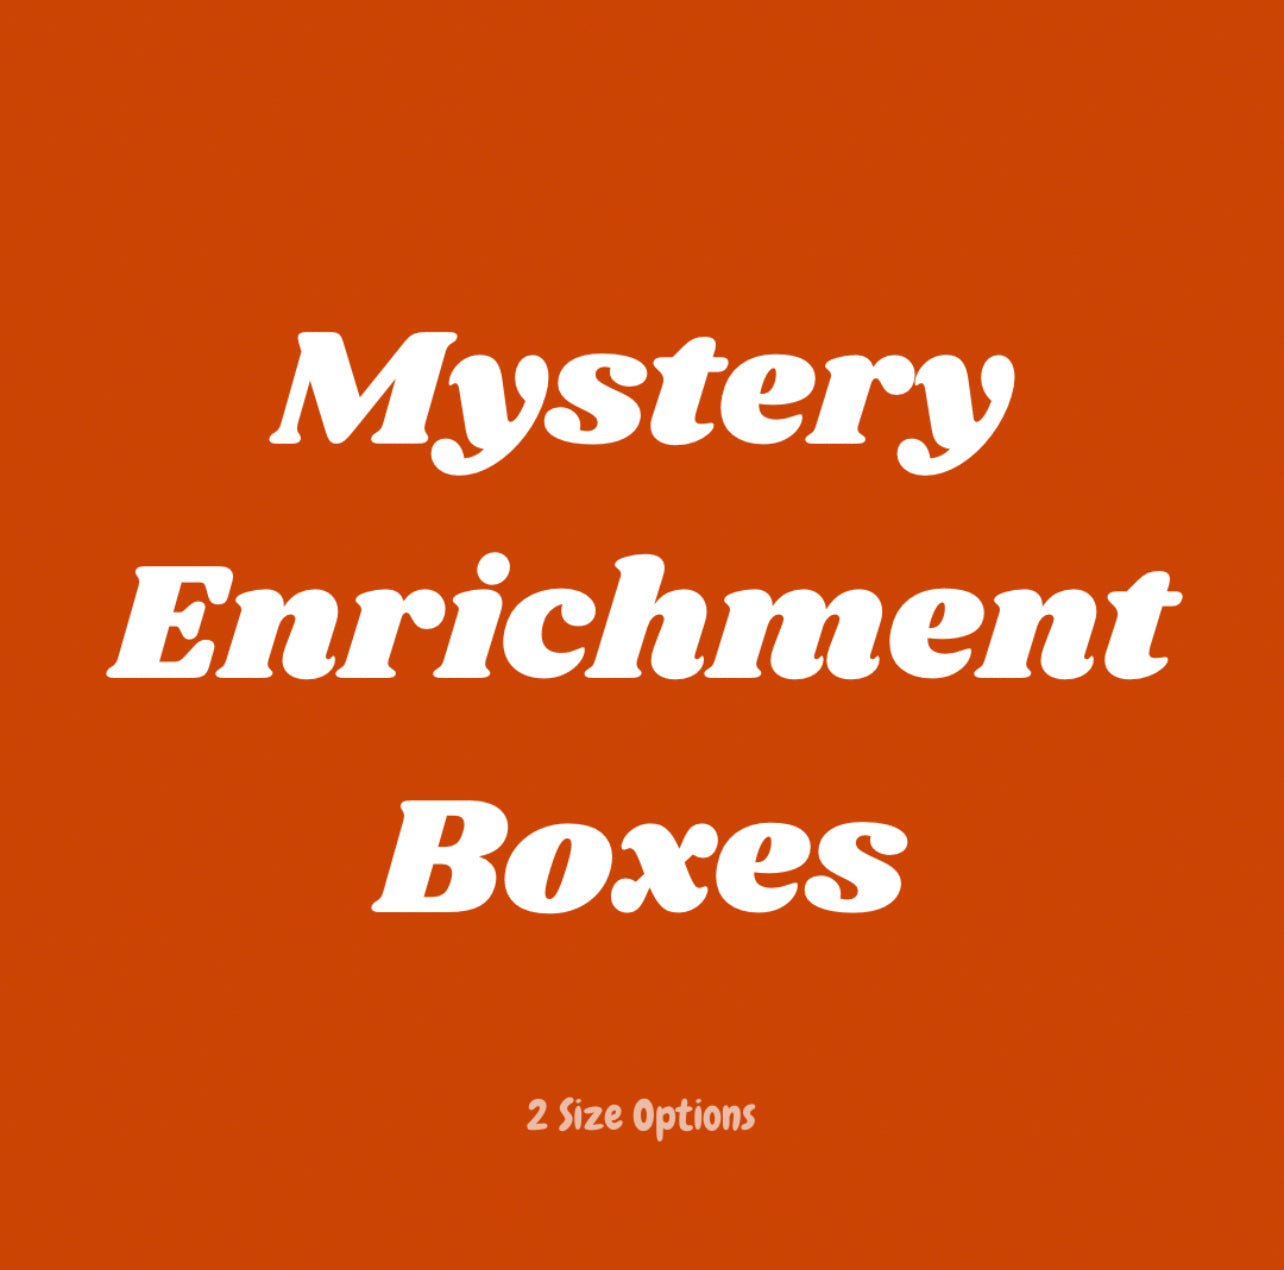 Mystery Enrichment Boxes